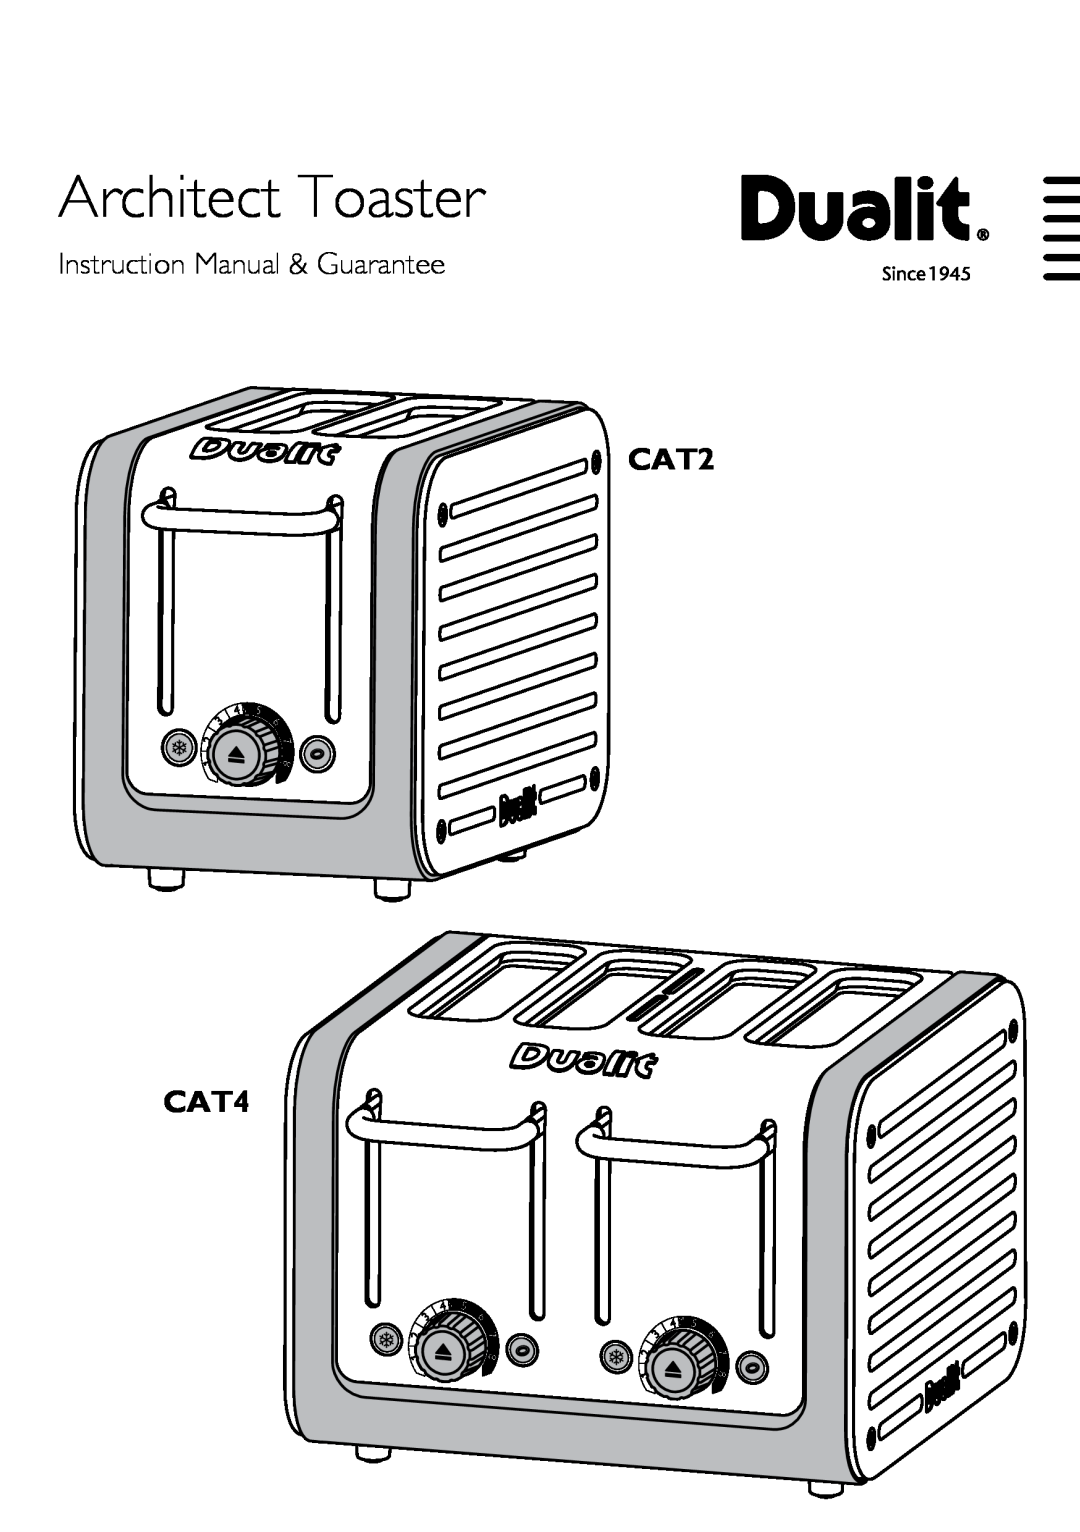 Dualit instruction manual Architect Toaster, CAT2 CAT4 